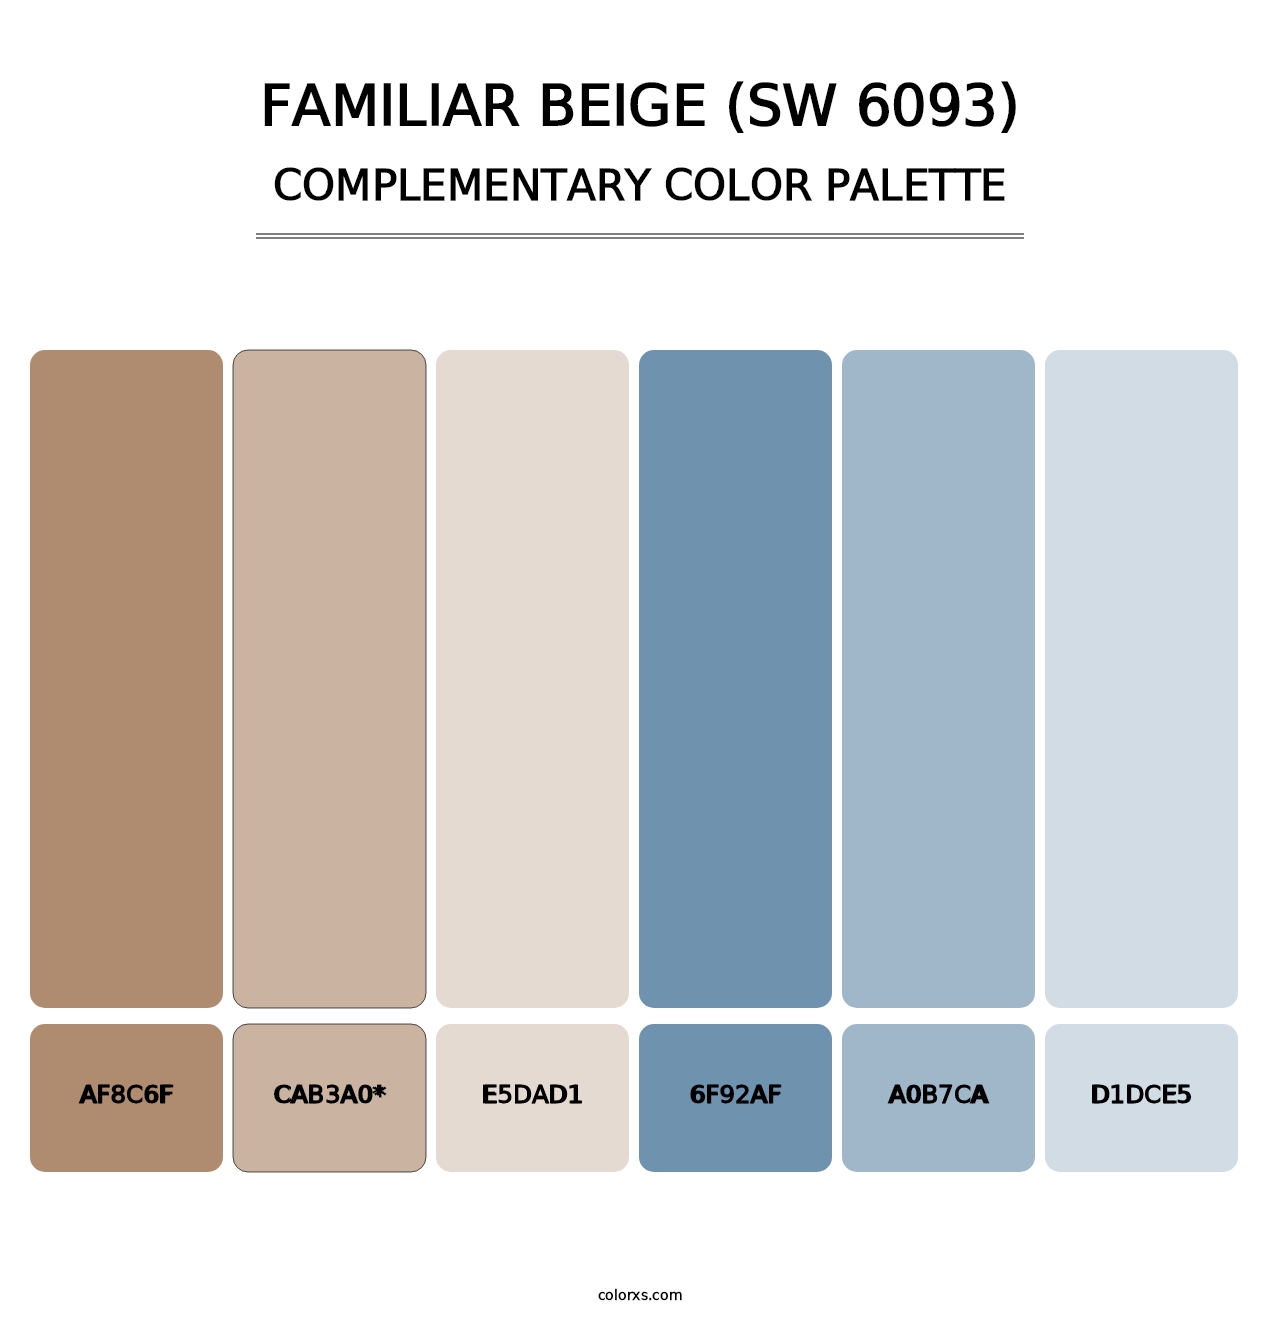 Familiar Beige (SW 6093) - Complementary Color Palette